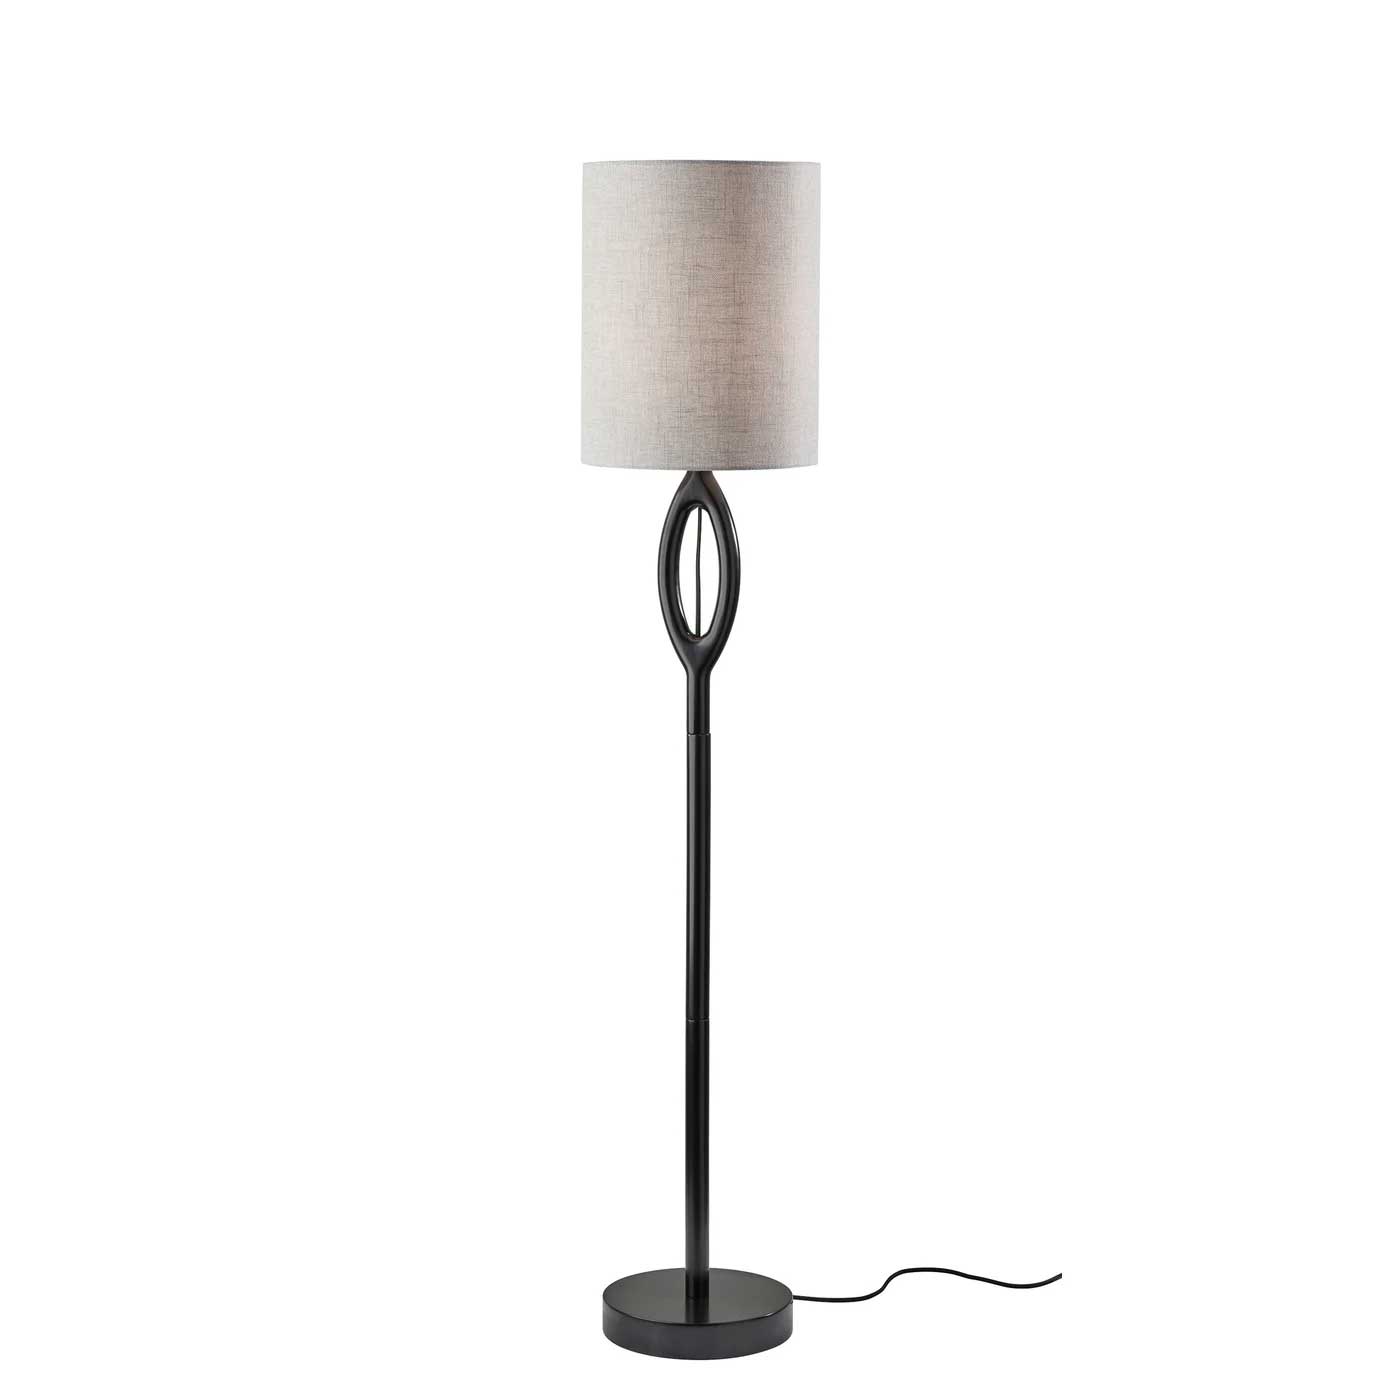 MAYFAIR Floor lamp Wood, Black - 1628-01 | ADESSO